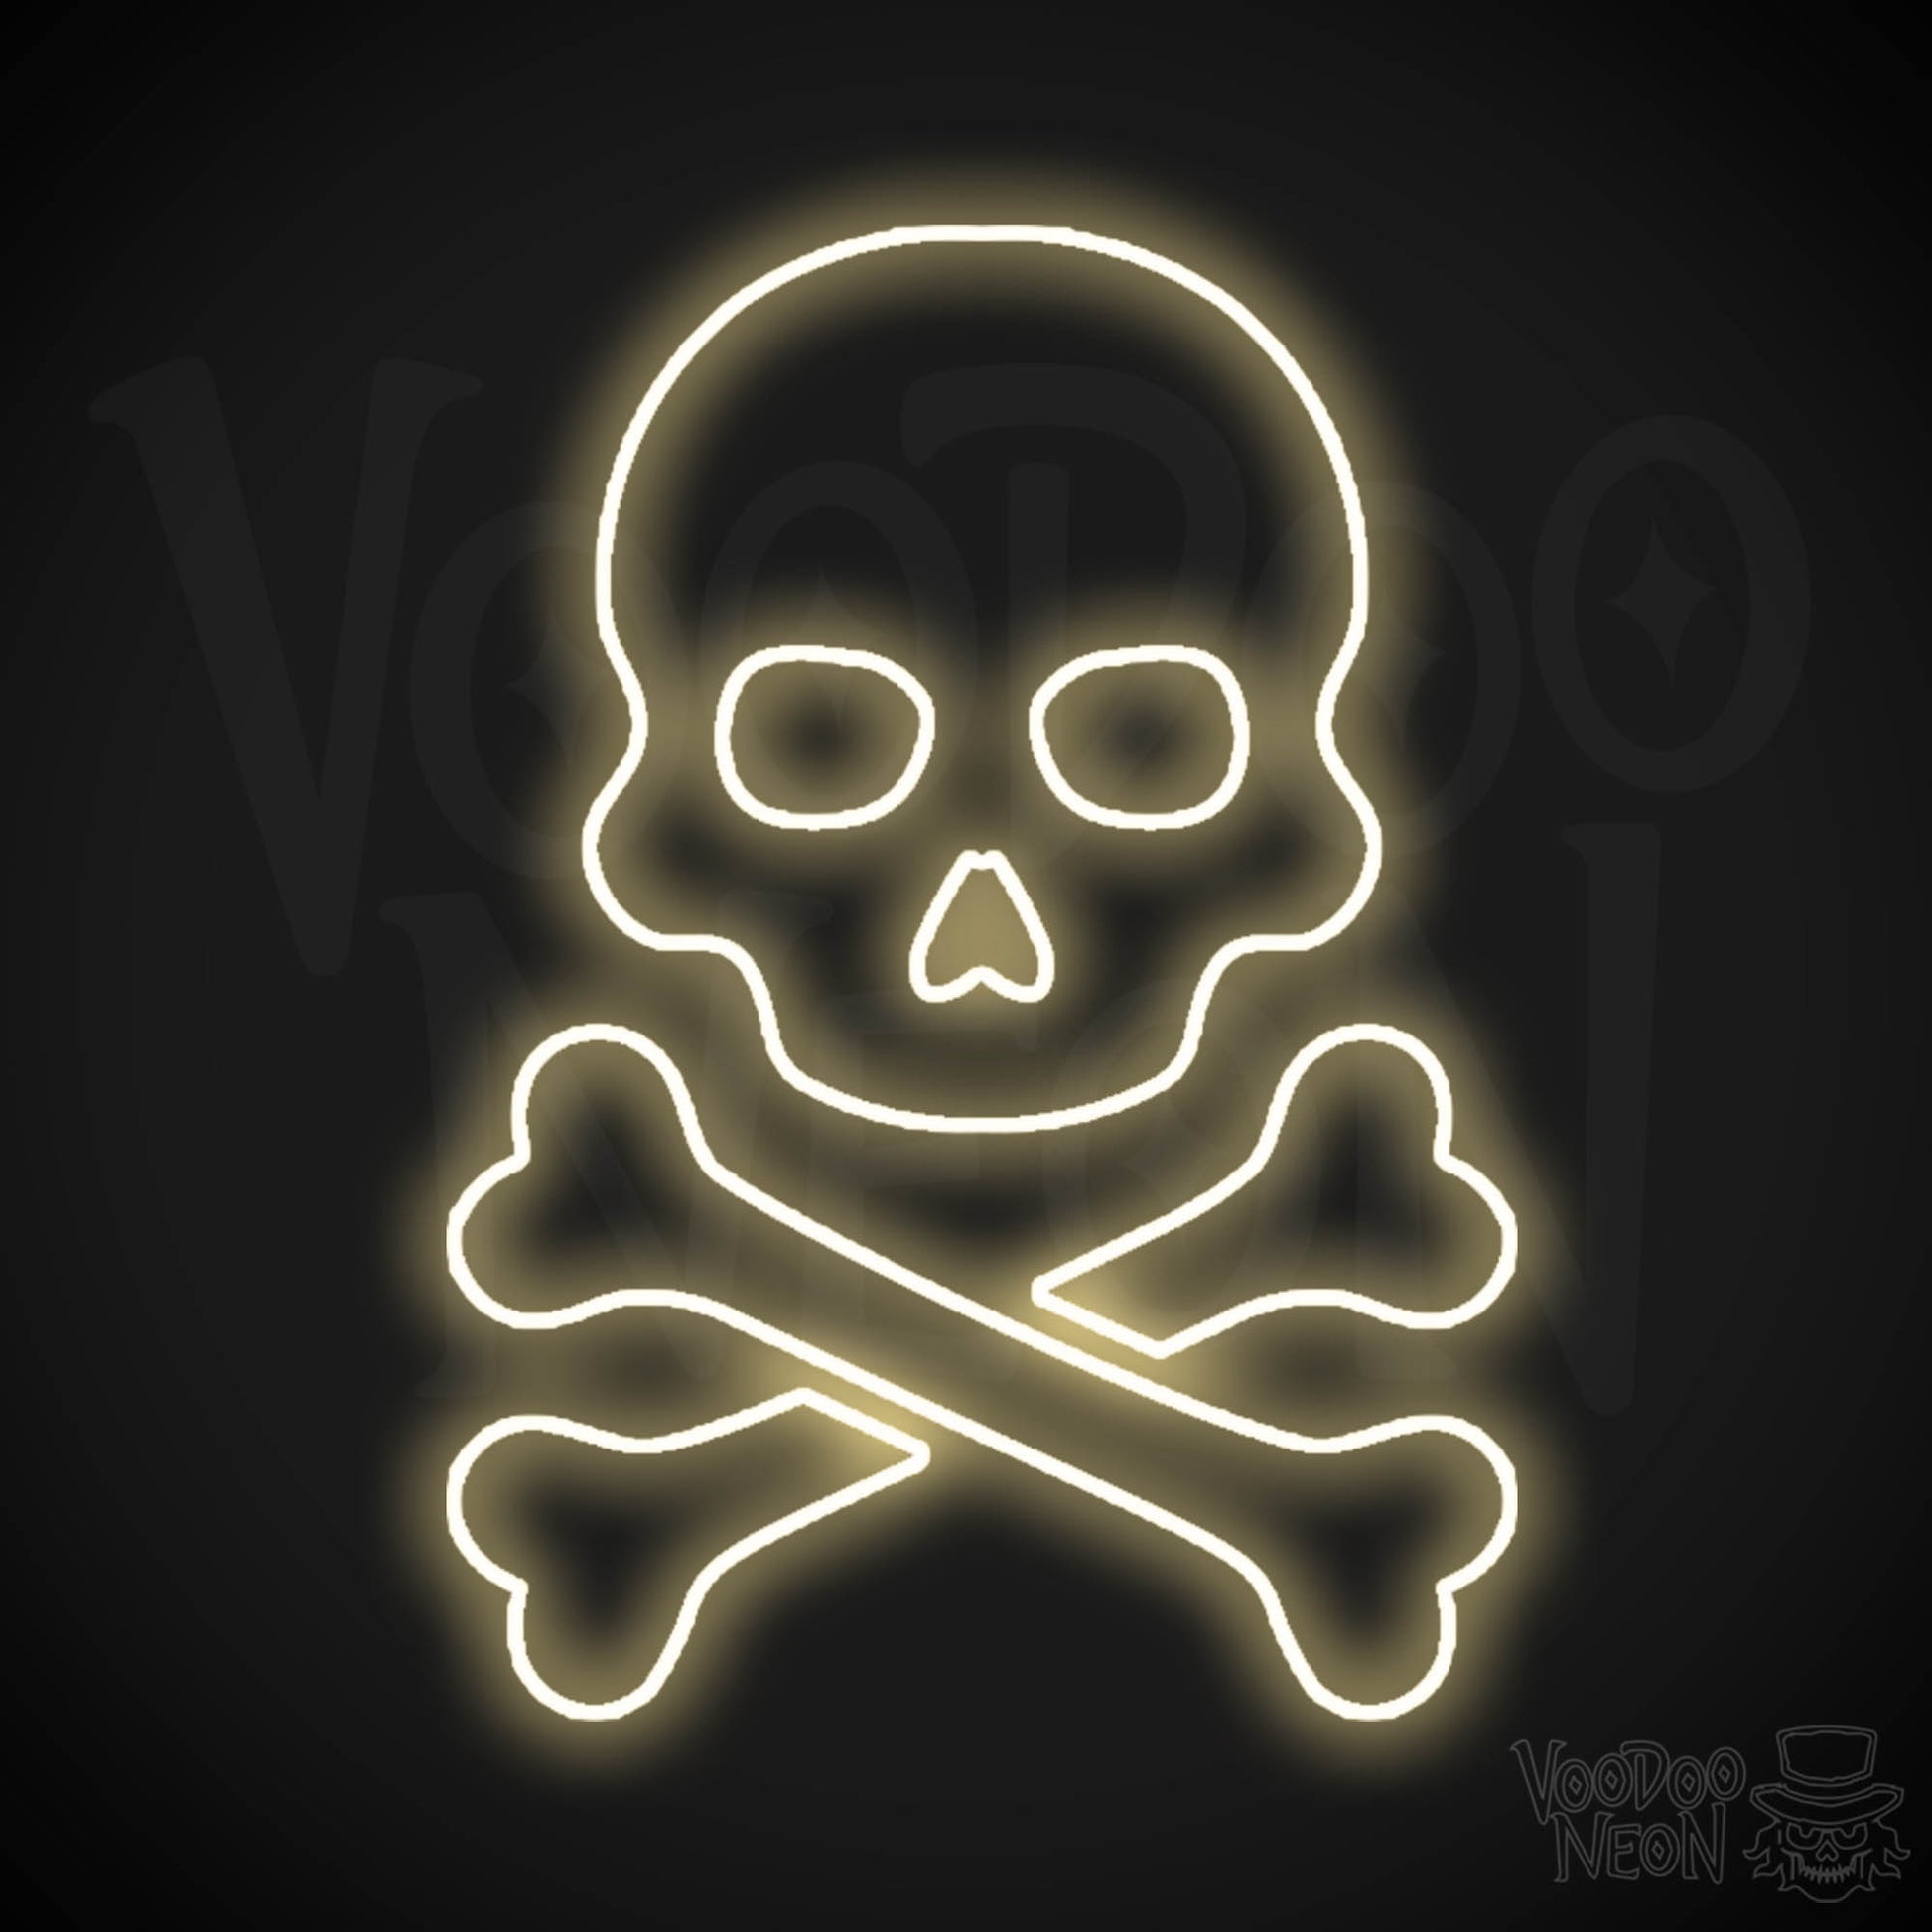 Pirate Skull & Crossbones Neon Sign - Neon Pirate Skull & Crossbones Sign - LED Lights - Color Warm White